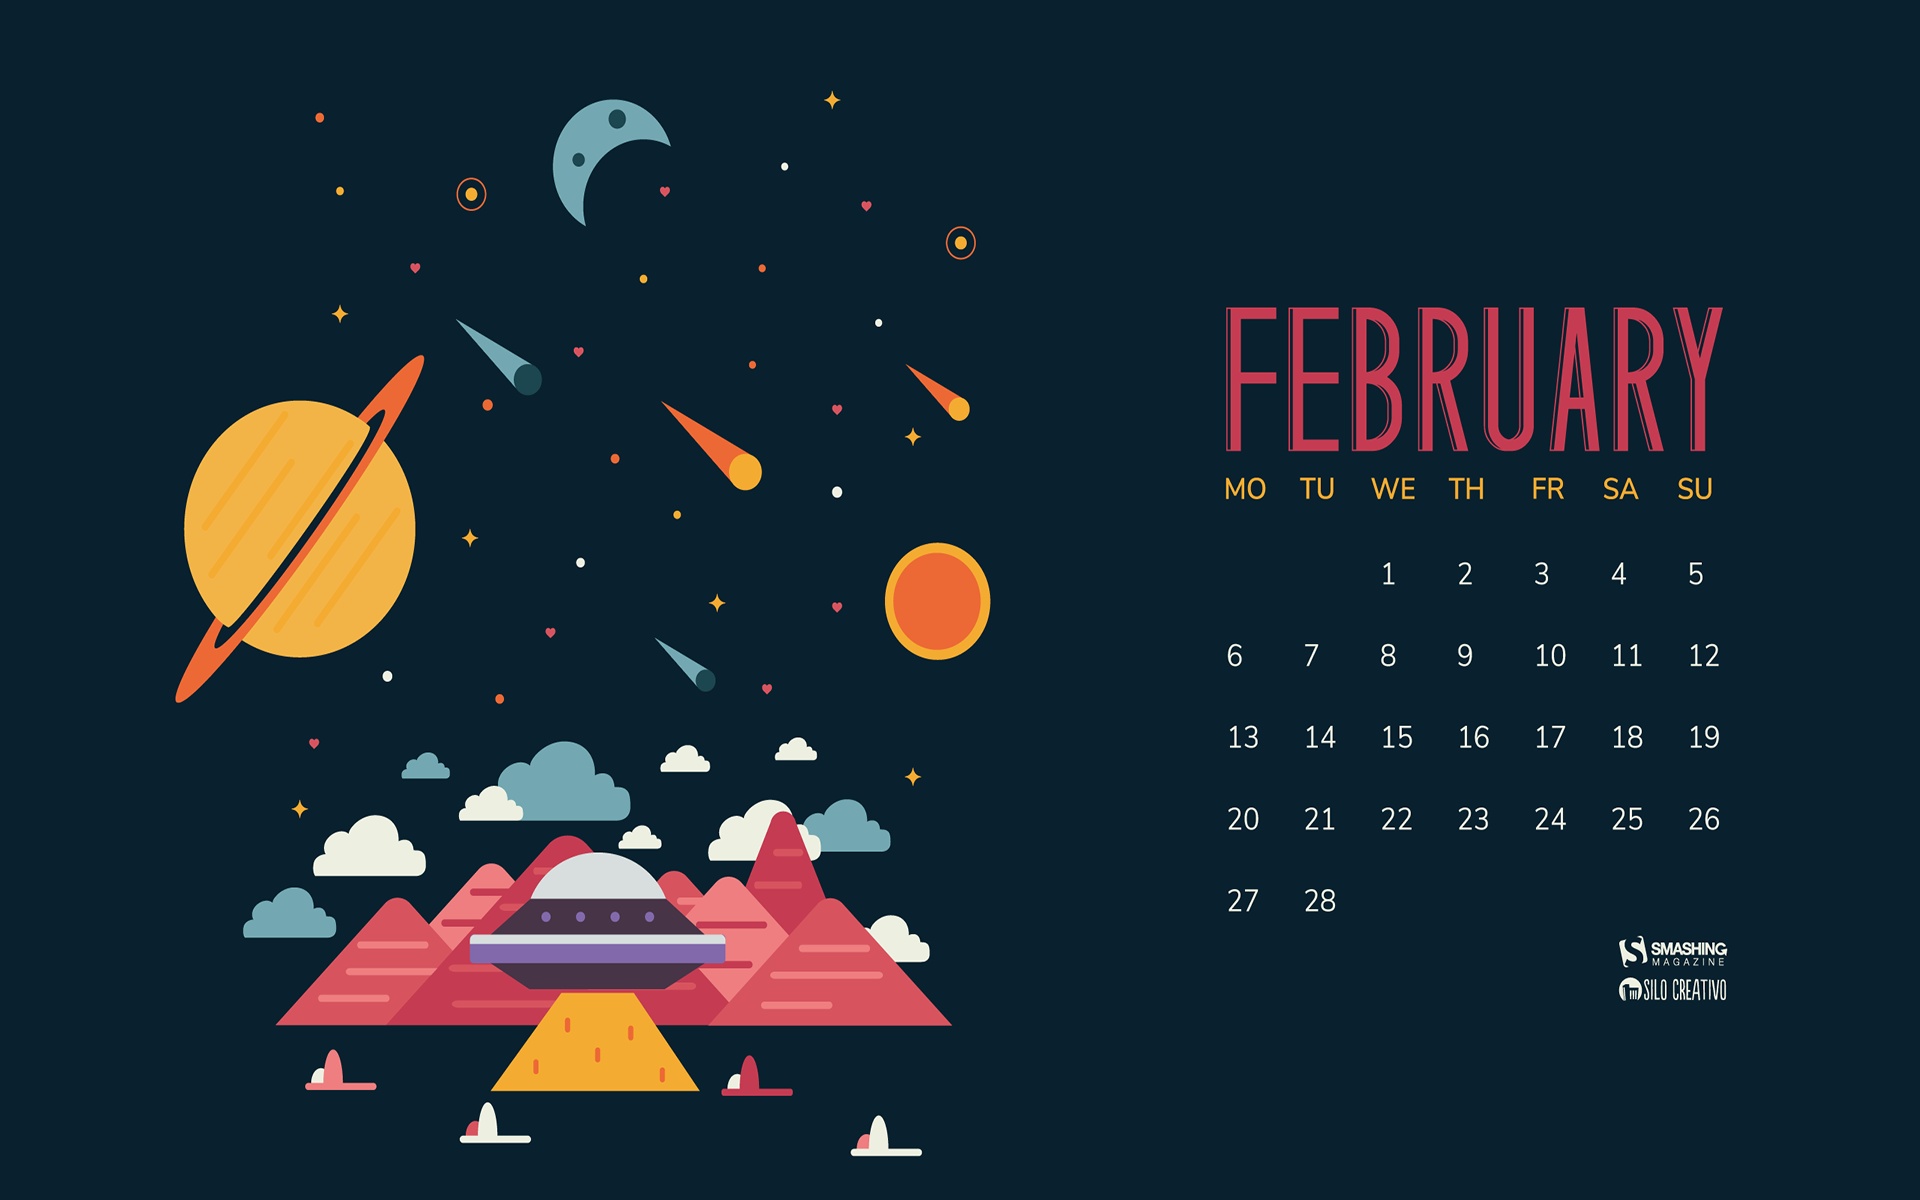 April 2021 calendar wallpapers – 30 FREE & cute design options!